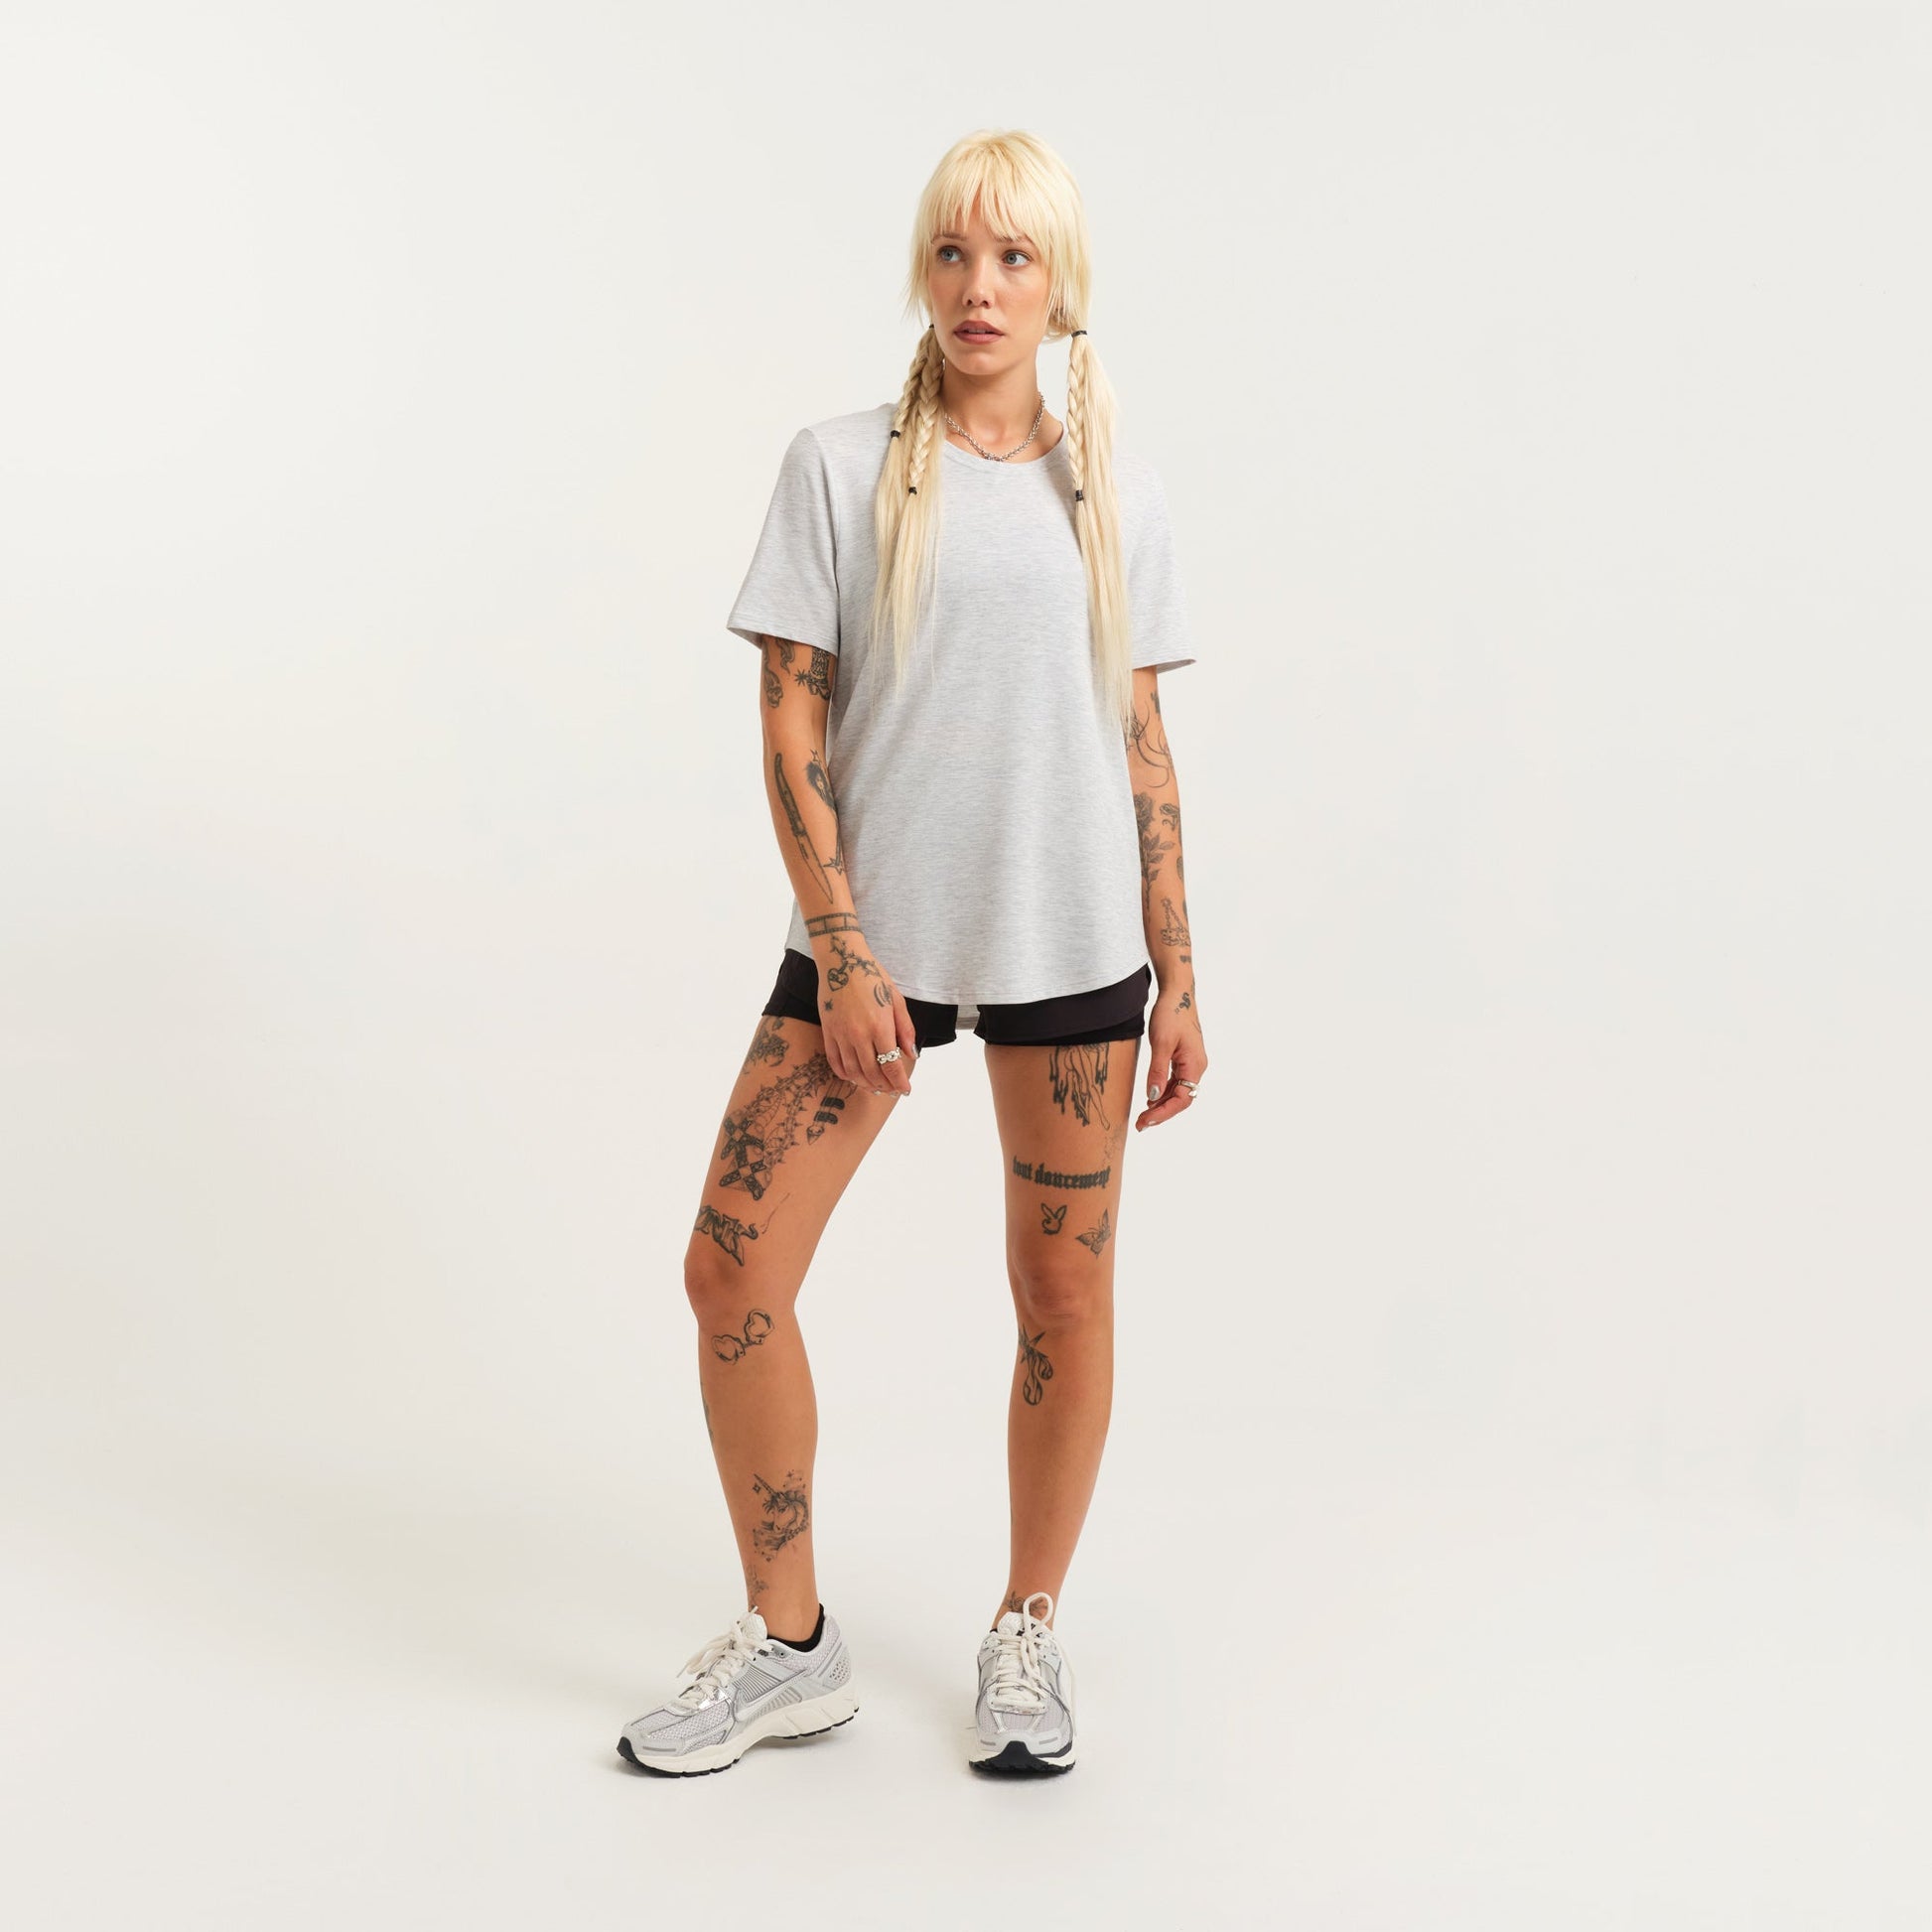 Stance Women's Get Set Performance T-Shirt Heather Stone |model